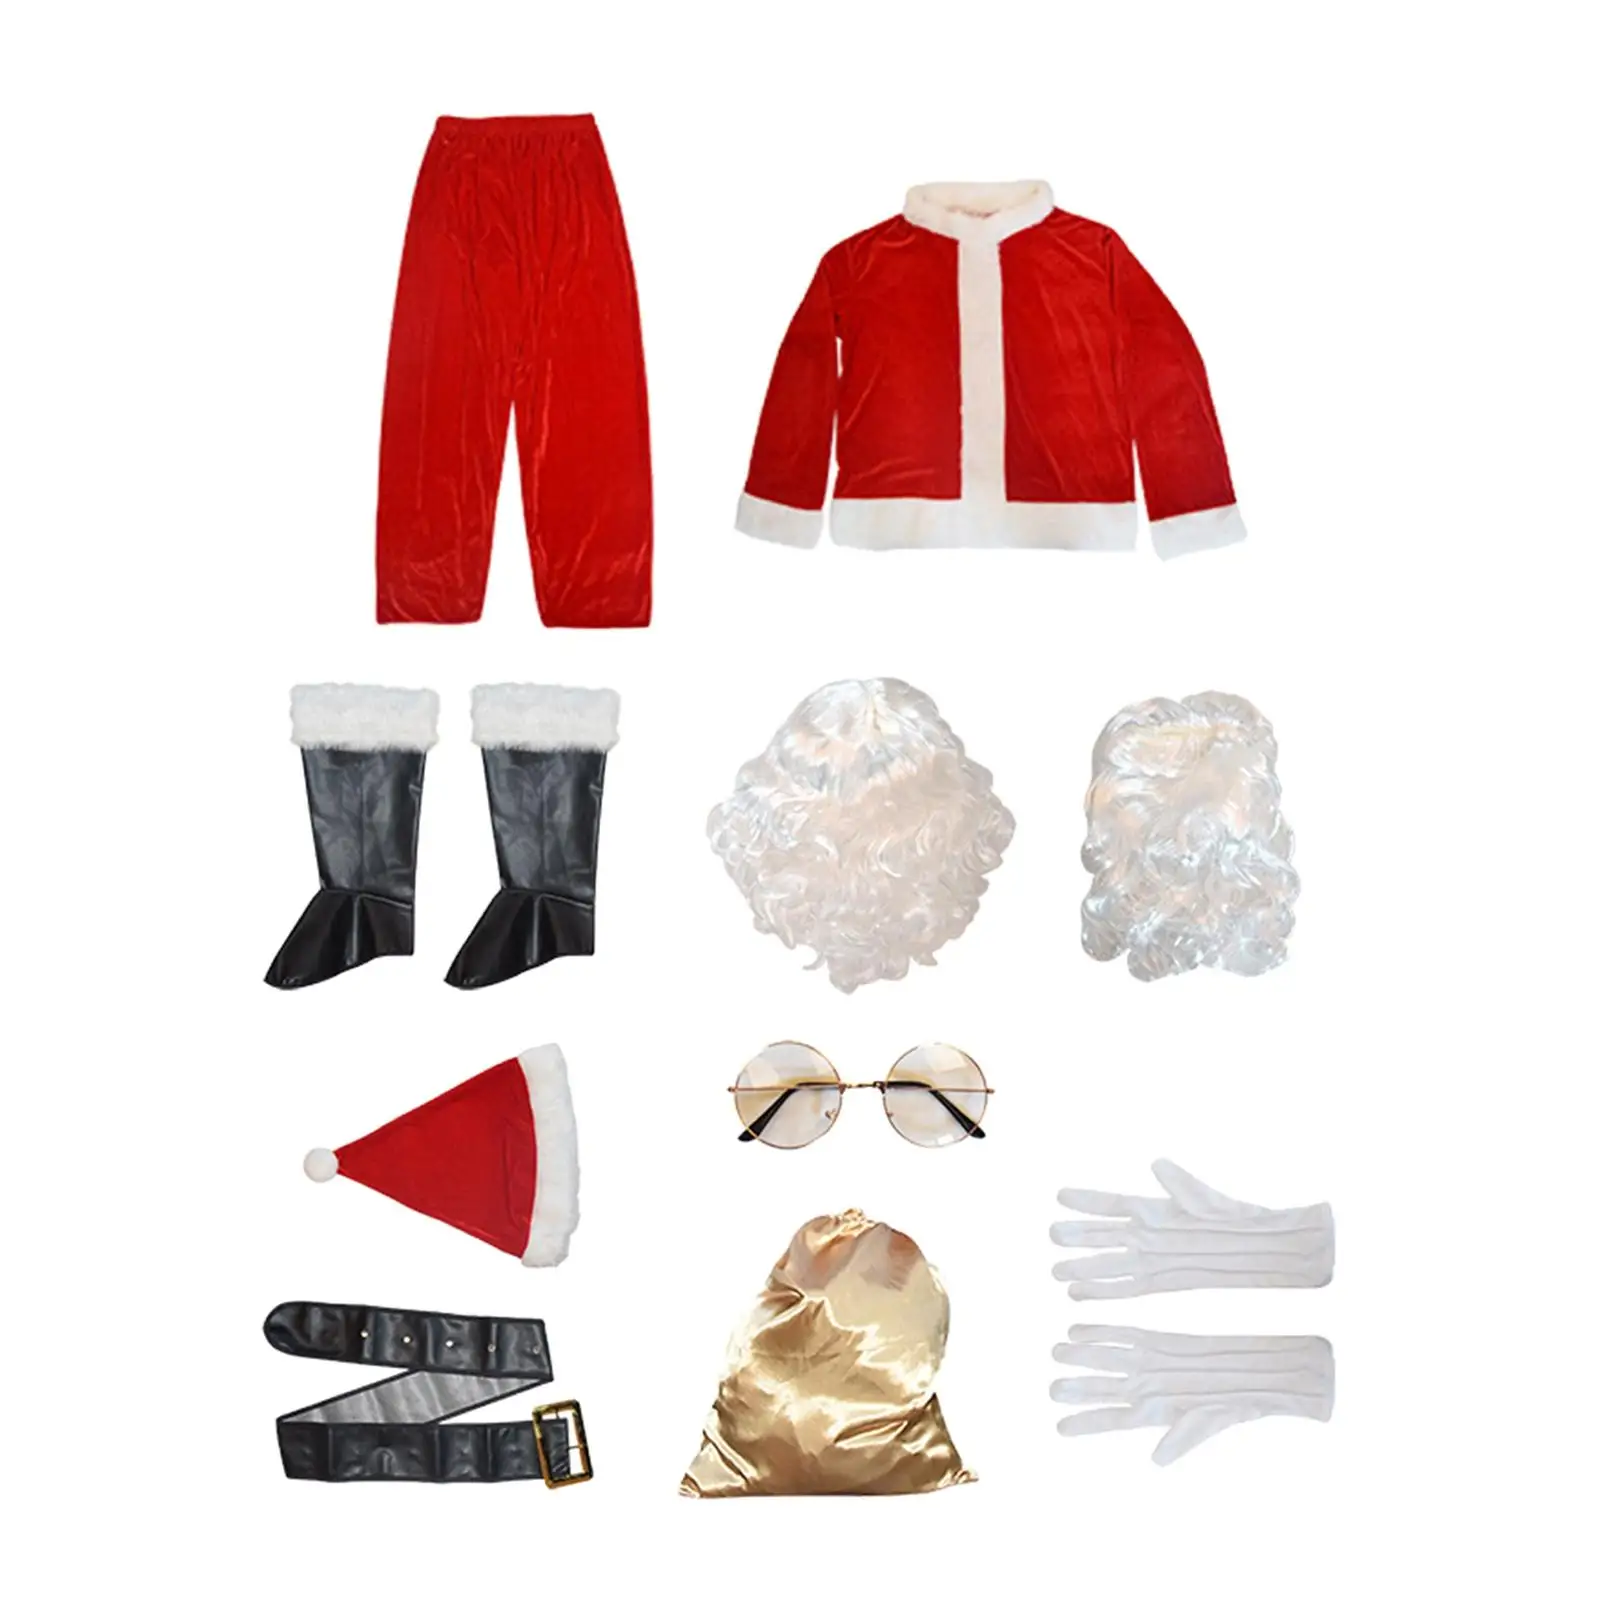 10Pcs Santa Claus Costume Gift Bag Santa Claus Hat Gloves Men Xmas suits Set for Party Xmas Holidays Clothing Accessory Carnival